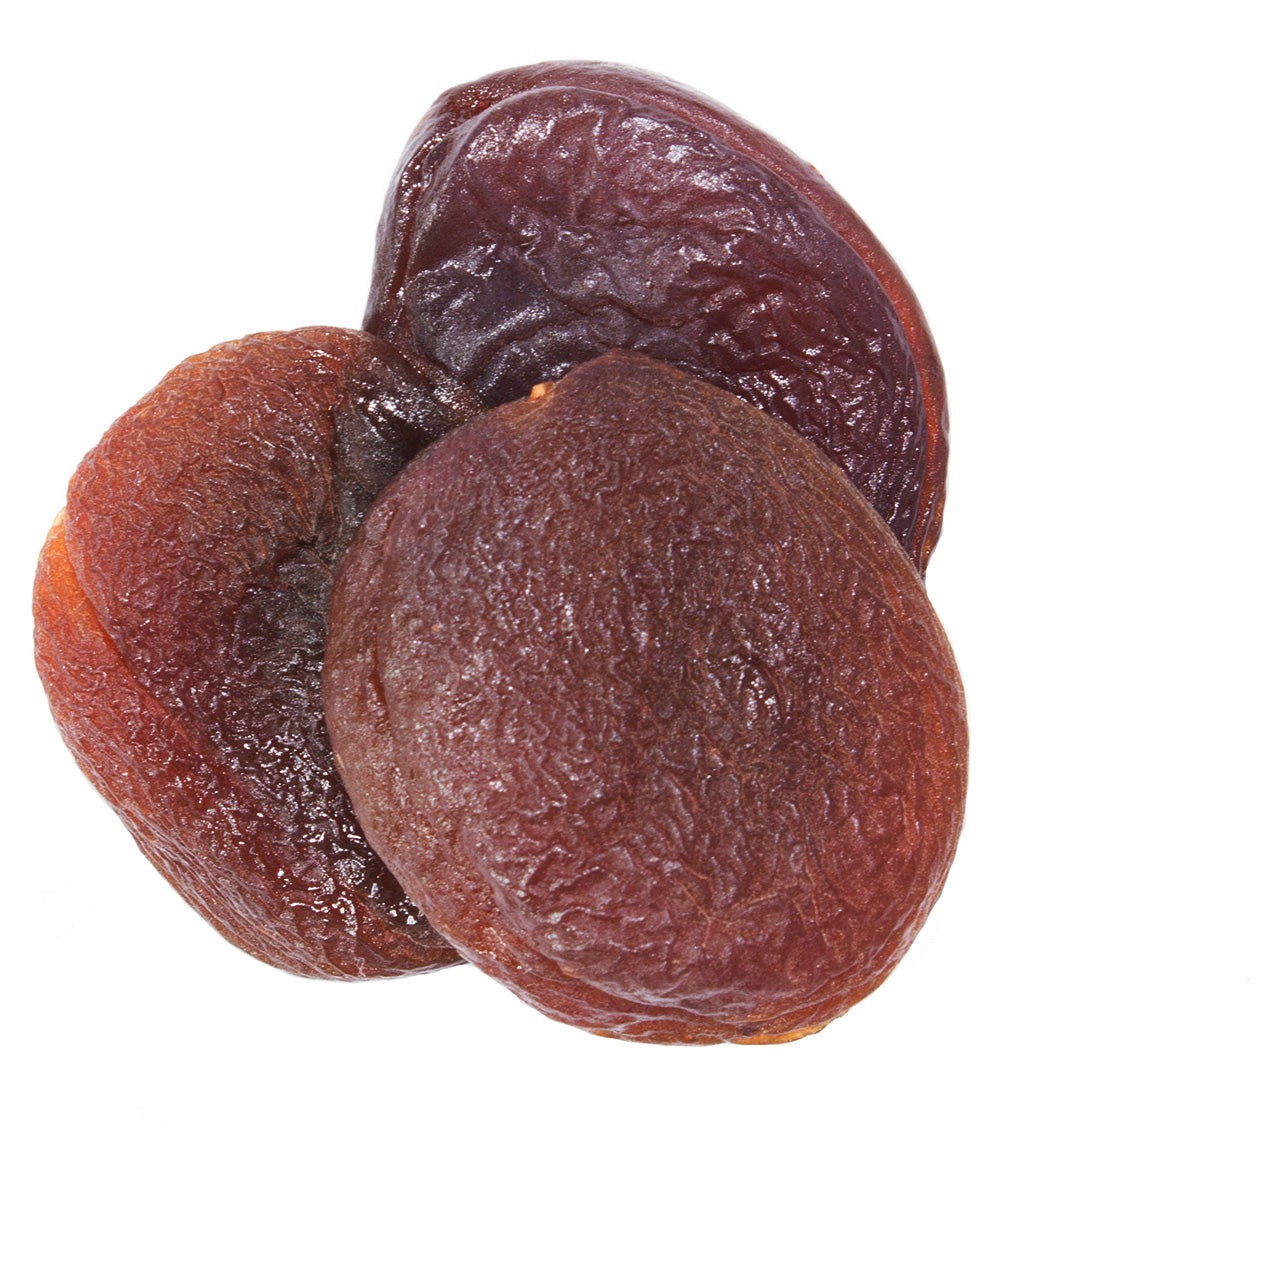 Turkish Apricots Certified Organic 28 Lb Box